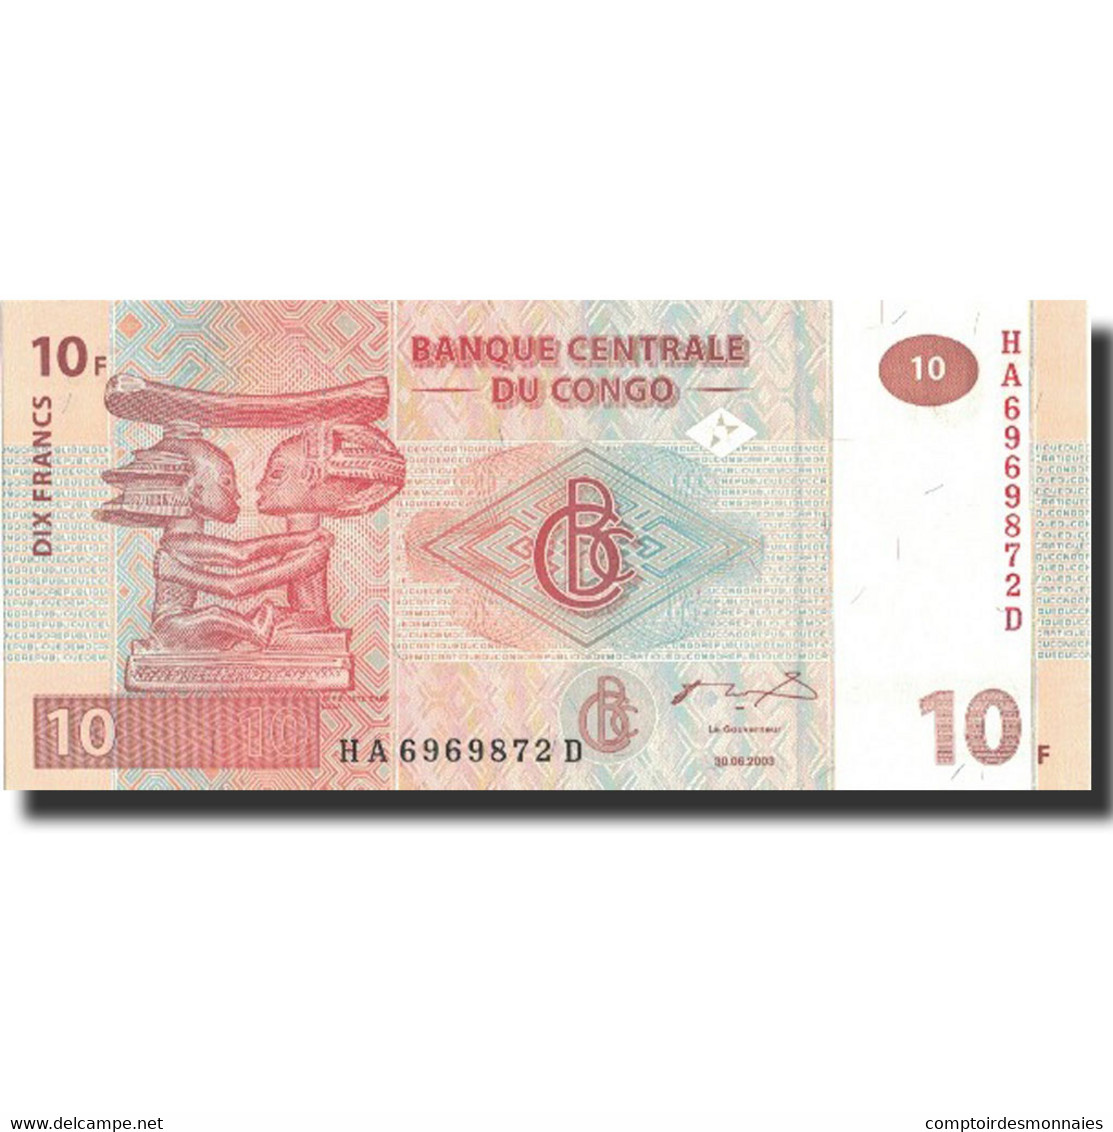 Billet, Congo Democratic Republic, 10 Francs, 2003, 2003-06-30, KM:93a, NEUF - Republic Of Congo (Congo-Brazzaville)